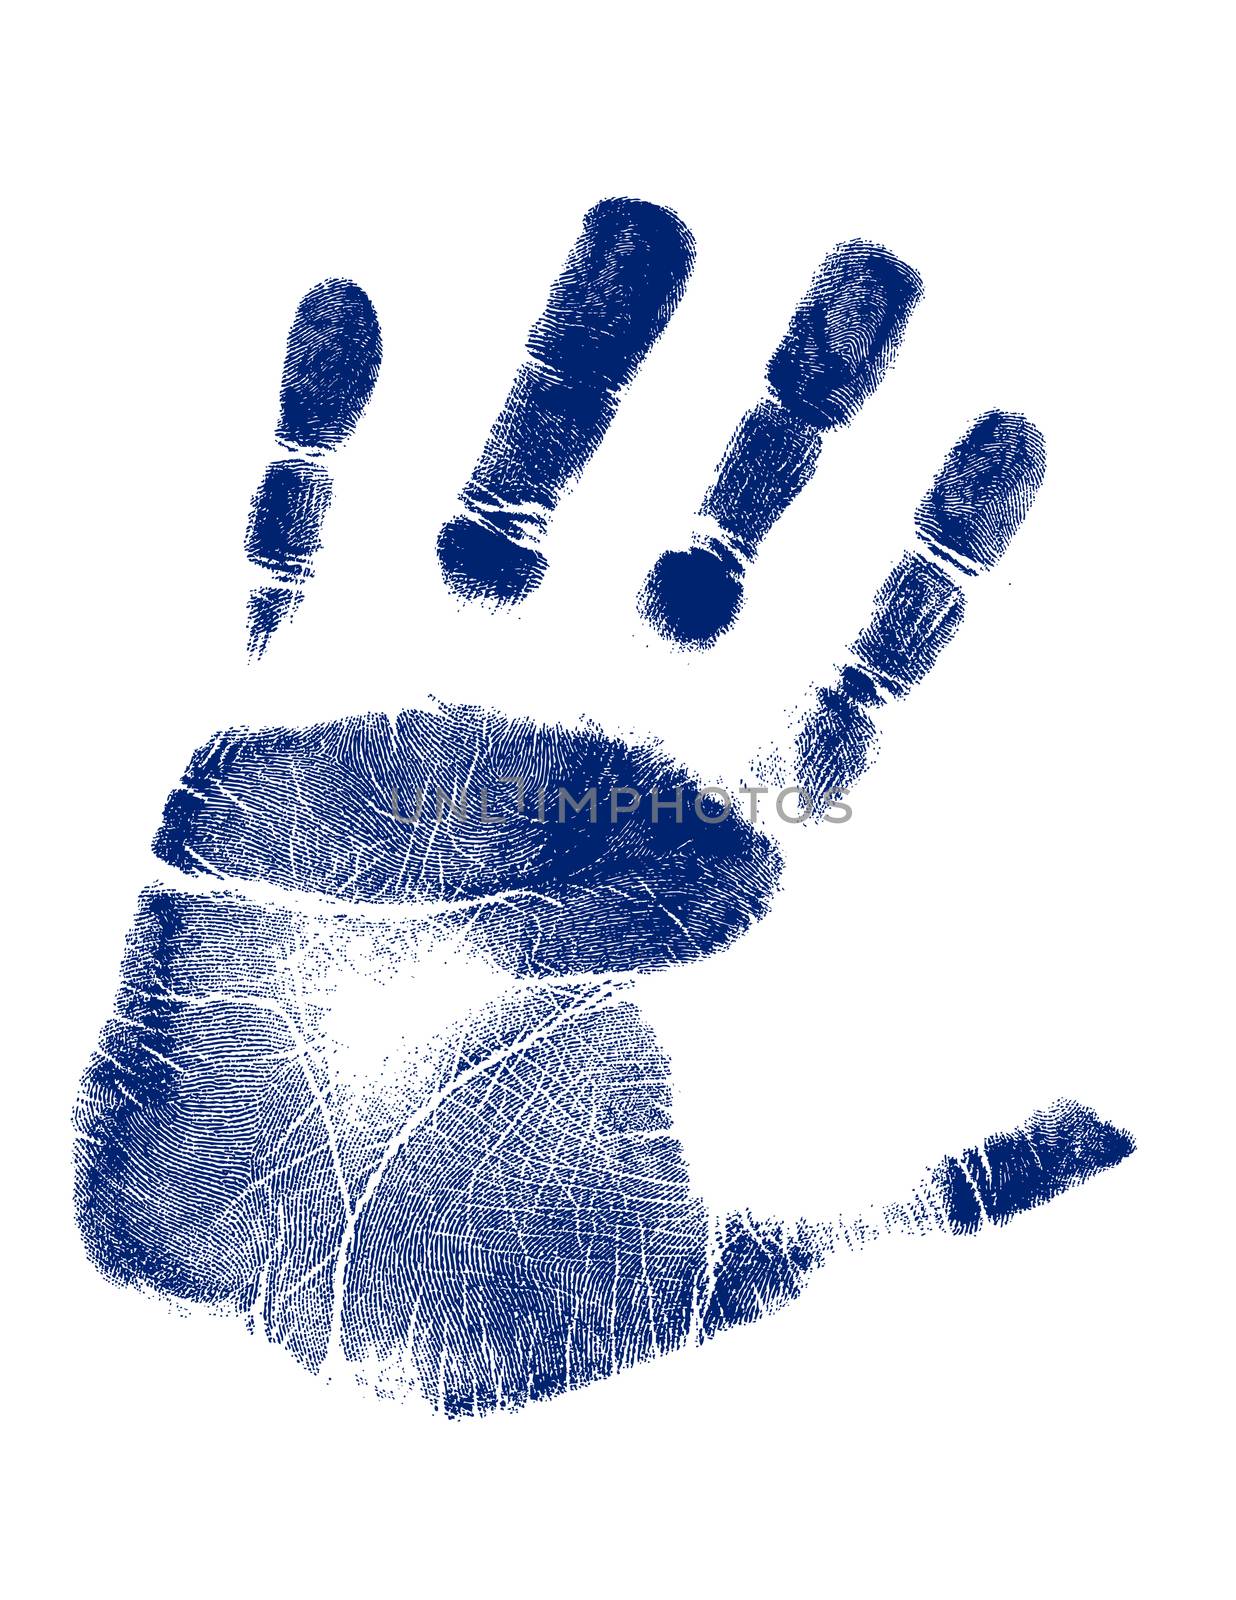 Blue hand-print shape over white background.